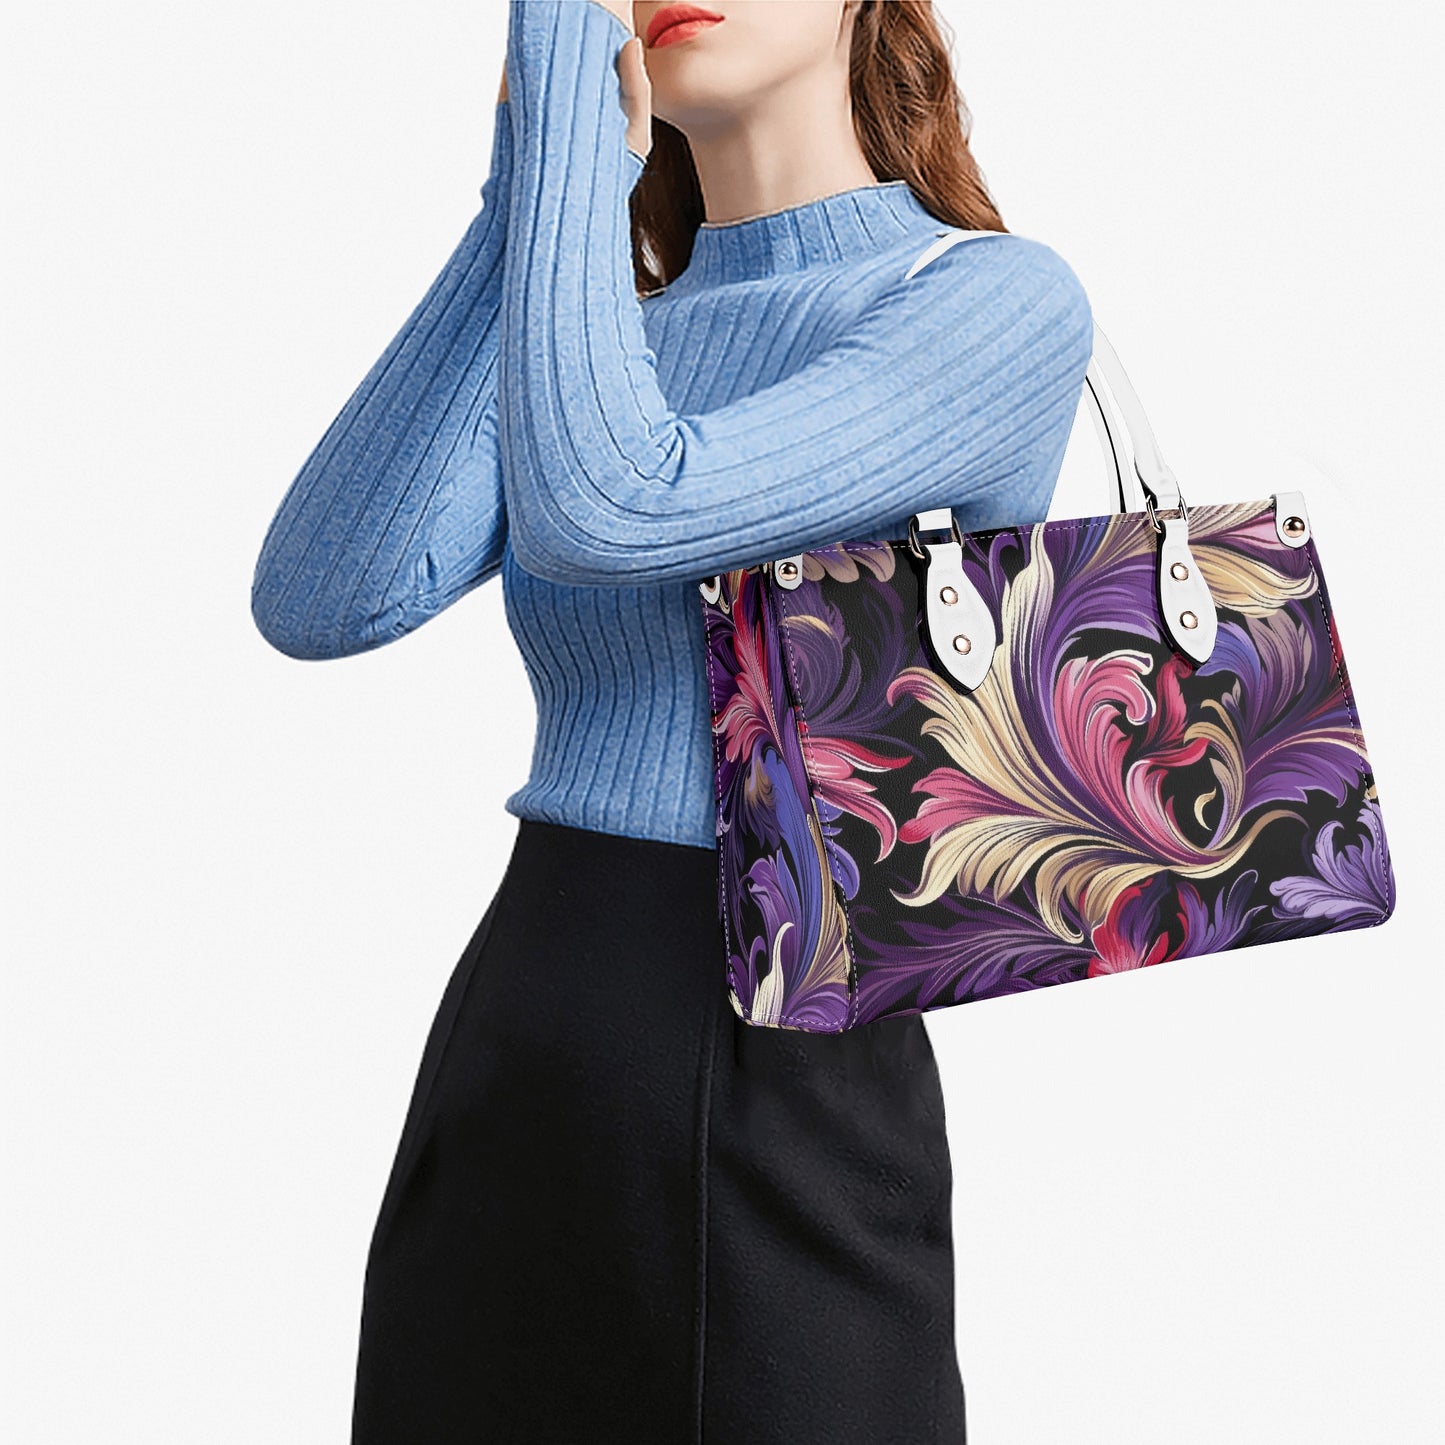 Purple, Gold & Pink Floral Swirls of Filigree Design Leather Handbag (PU) - 3 Sizes